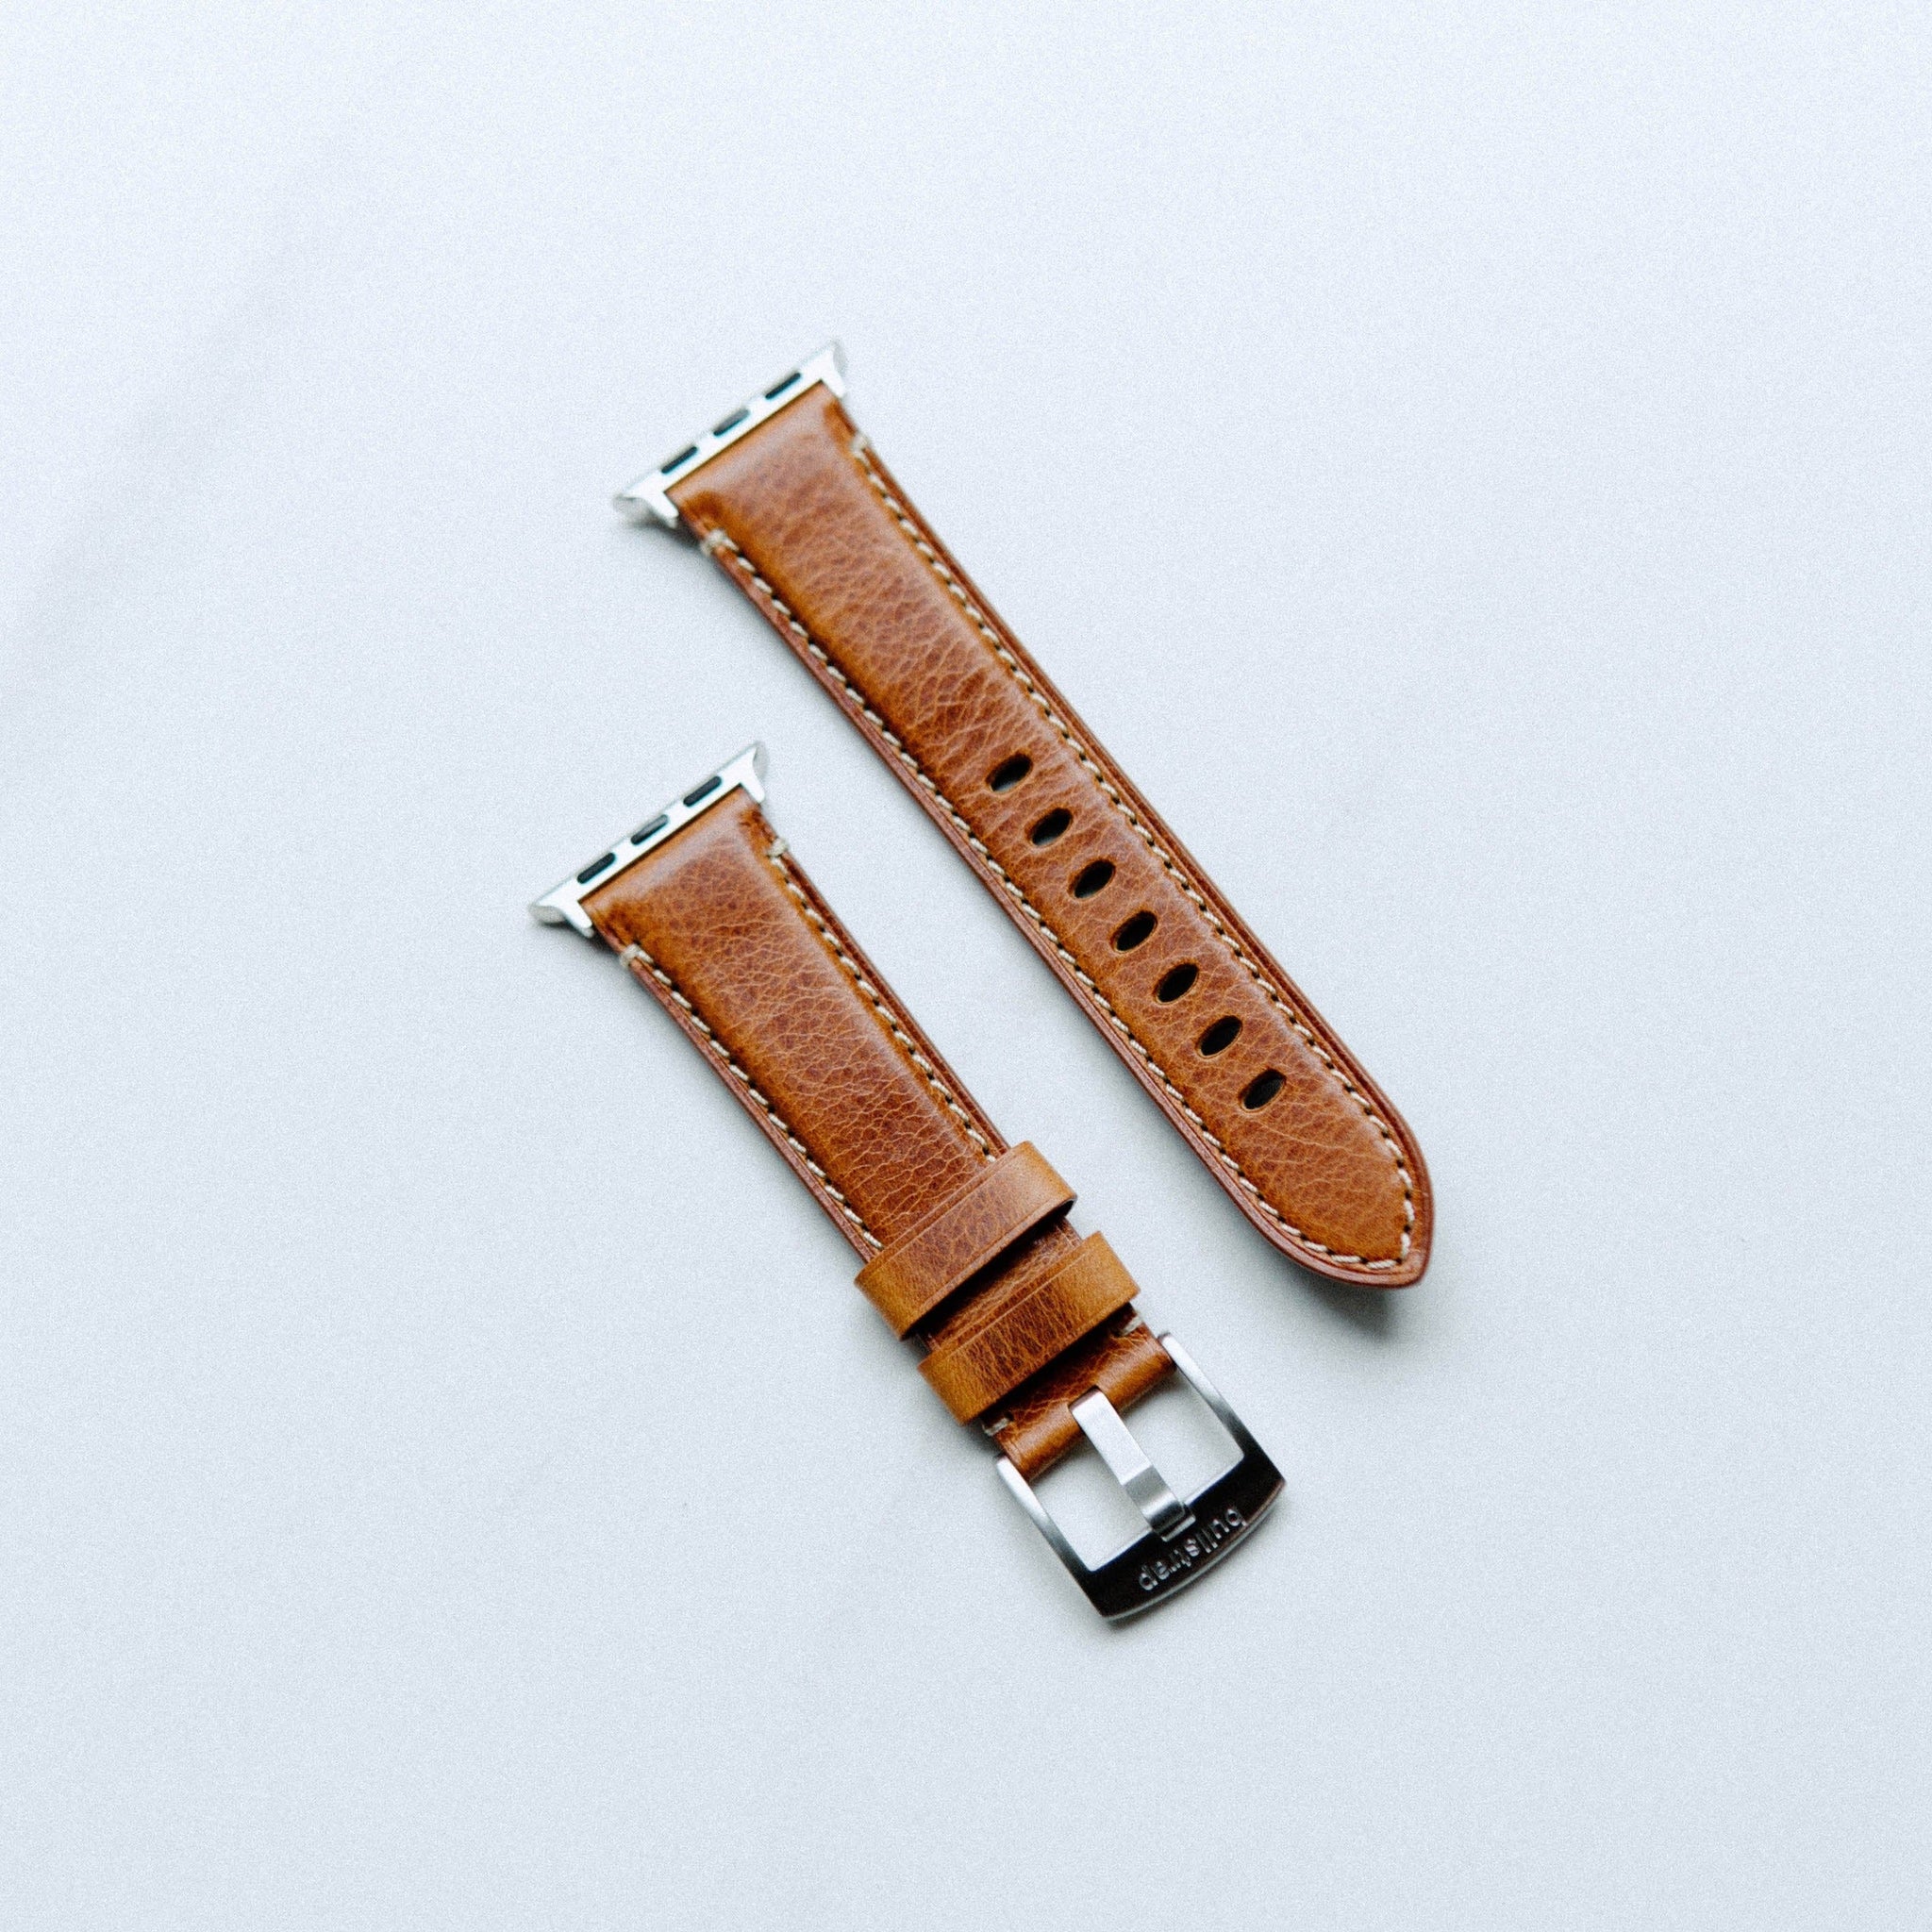 Leather Apple Watch Strap - Sienna by Bullstrap